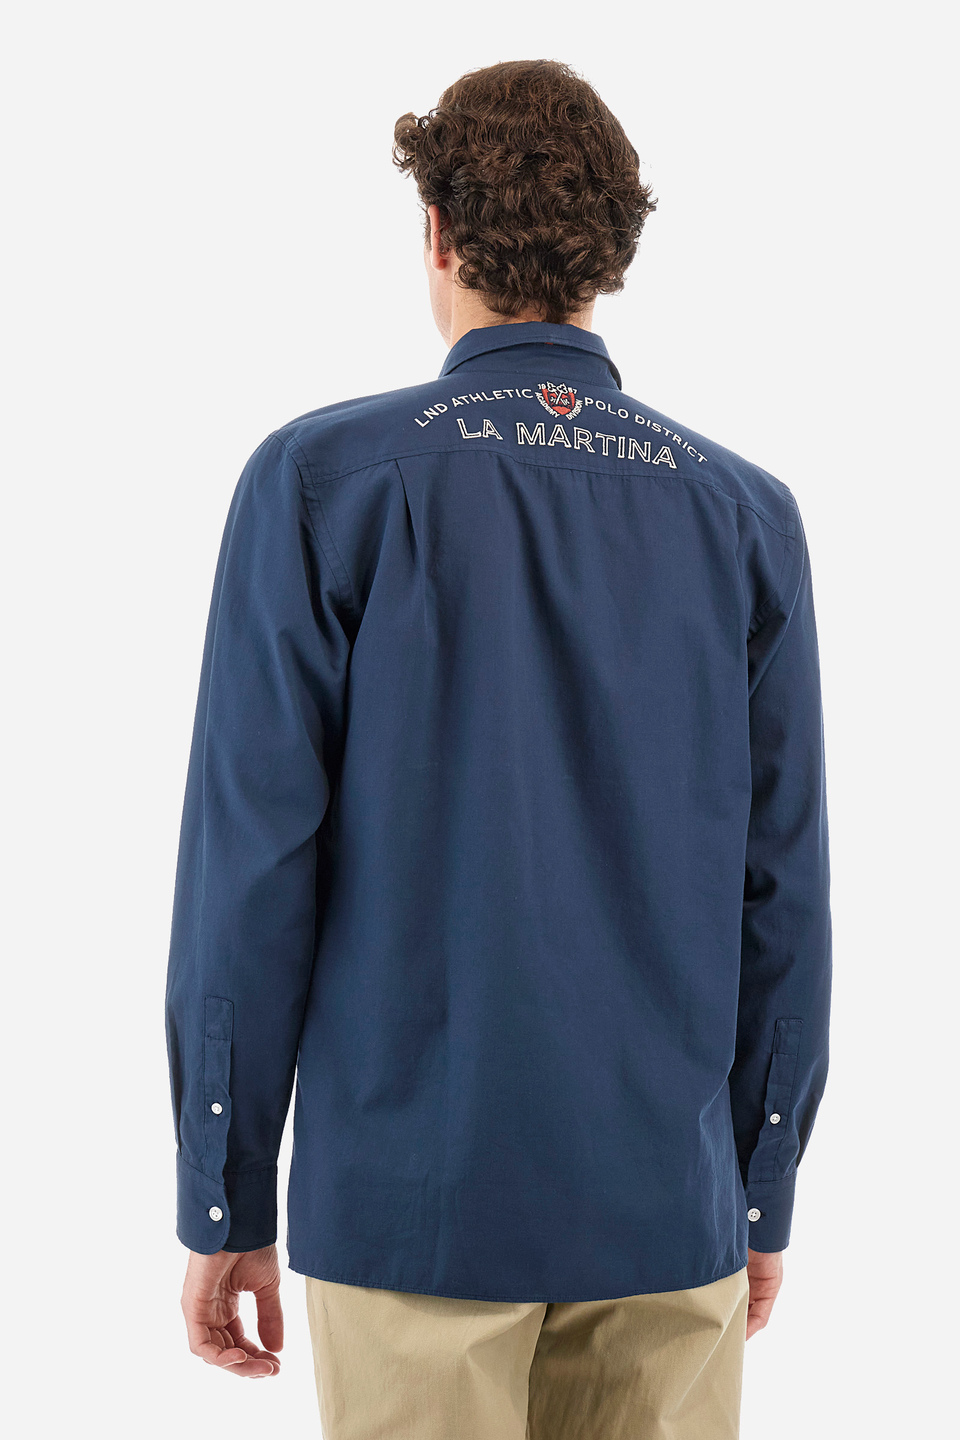 Herrenhemd Regular Fit - Yamino | La Martina - Official Online Shop